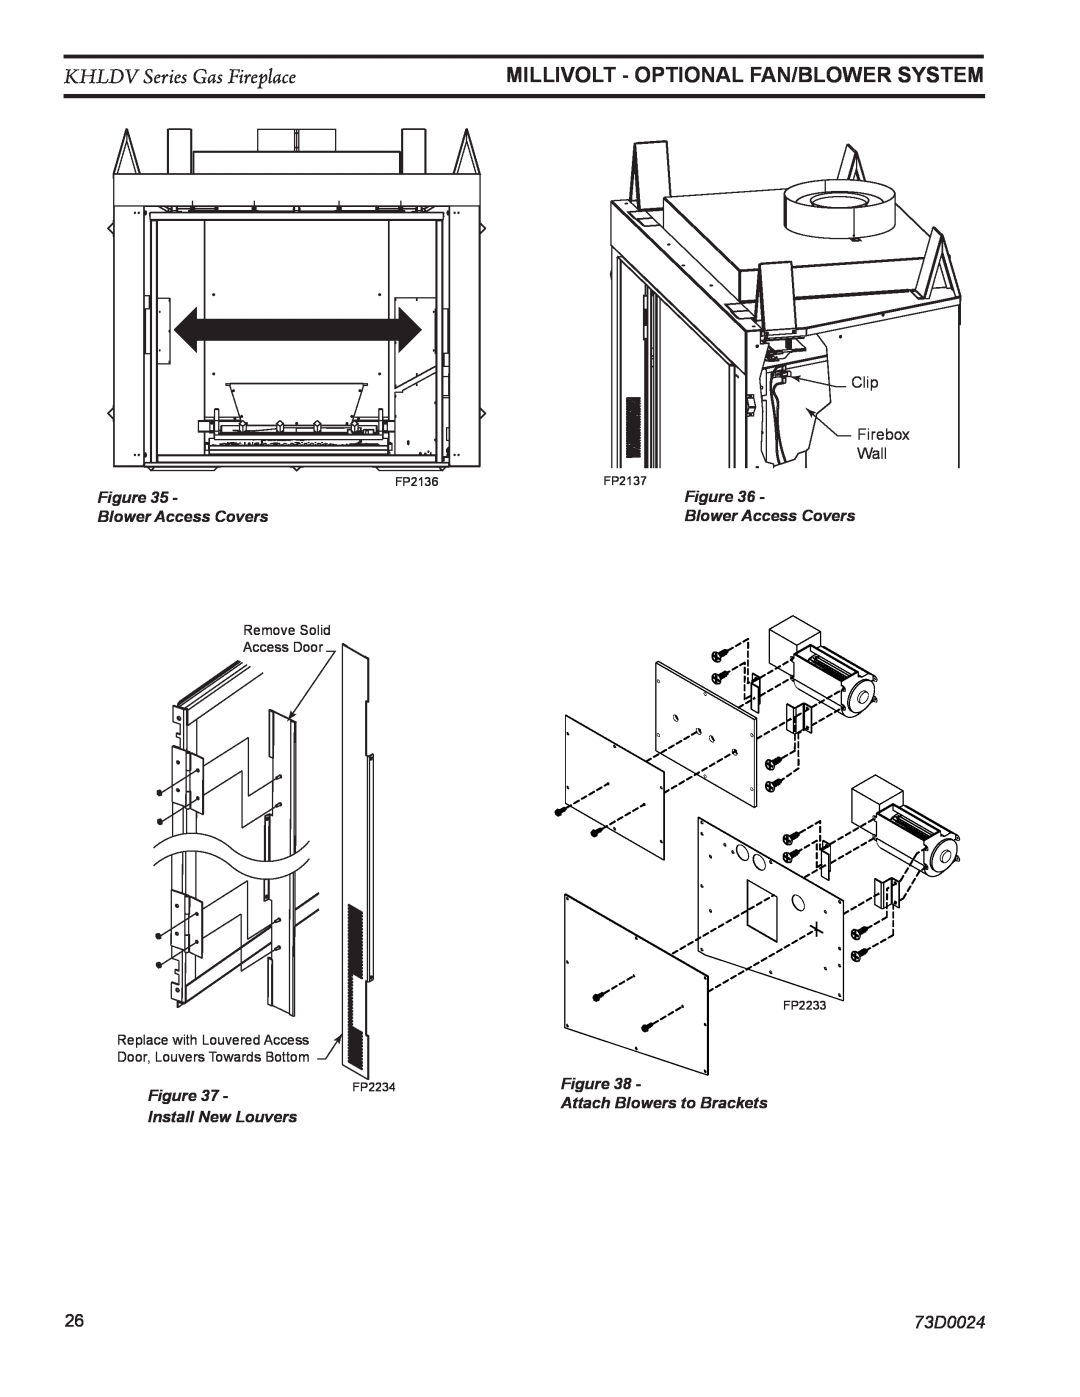 Monessen Hearth KHLDV500 KHLDV Series Gas Fireplace, millivolt - OPTIONAL FAN/BLOWER SYSTEM, 73D0024, Figure, FP2234 